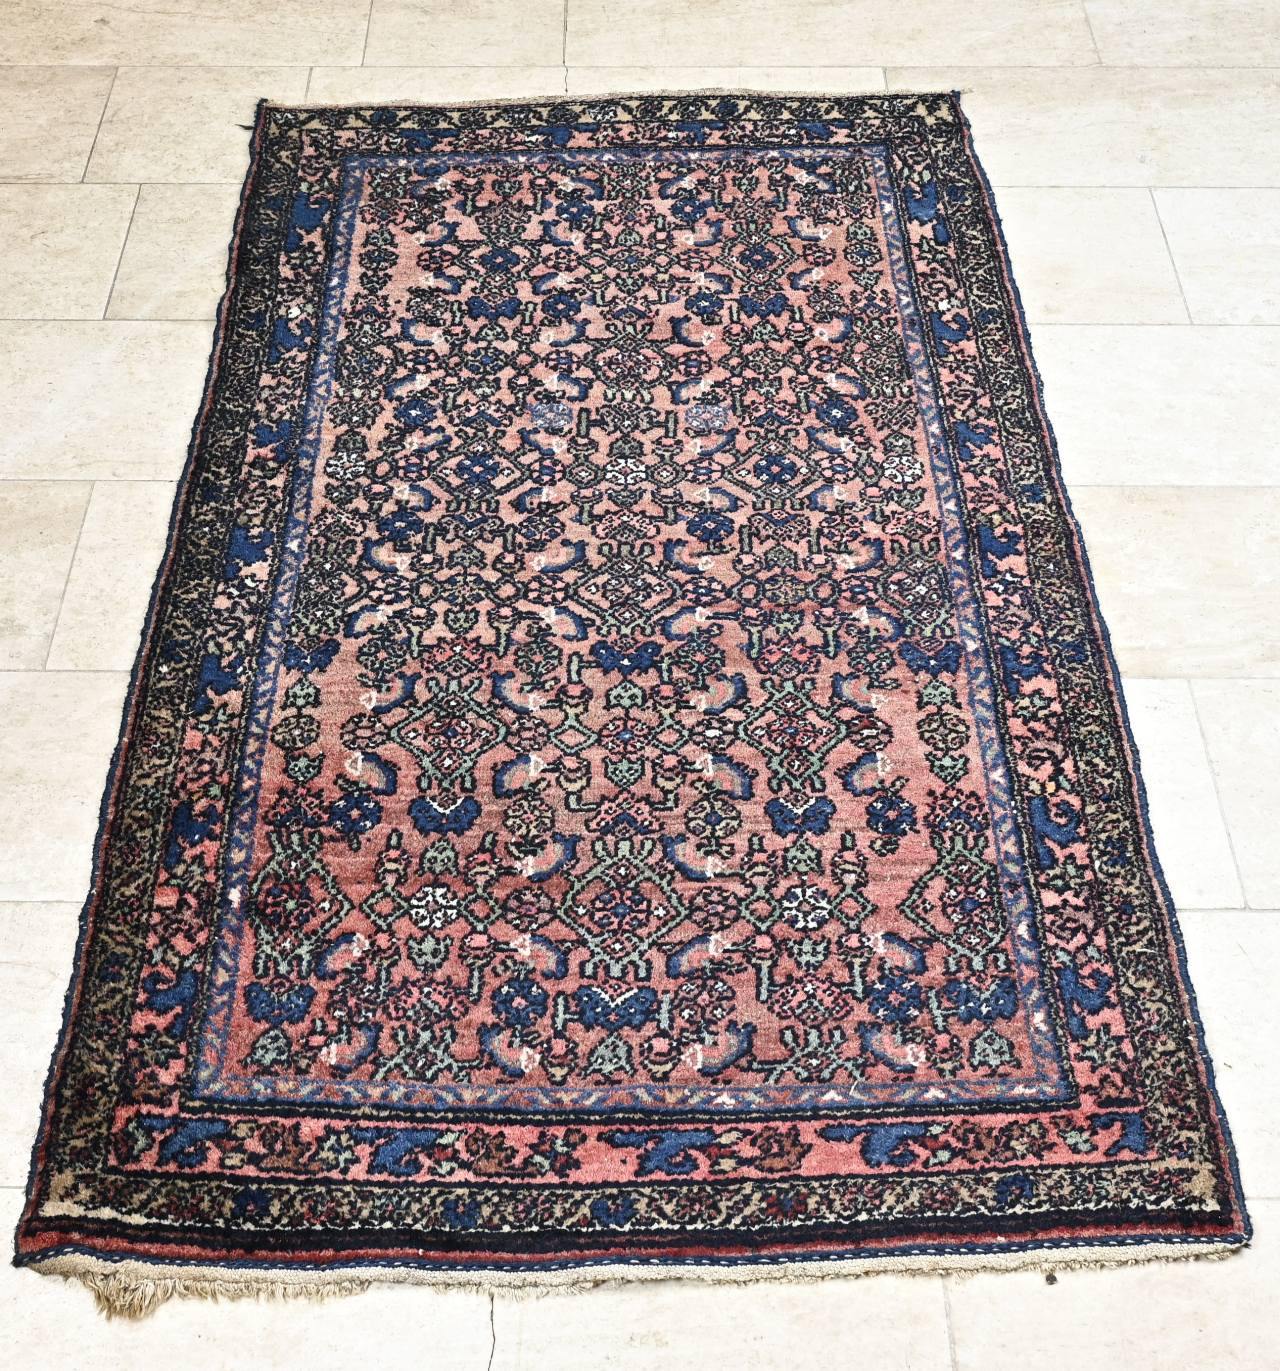 Handgeknoopt Perzisch tapijt, 180 x 106 cm.